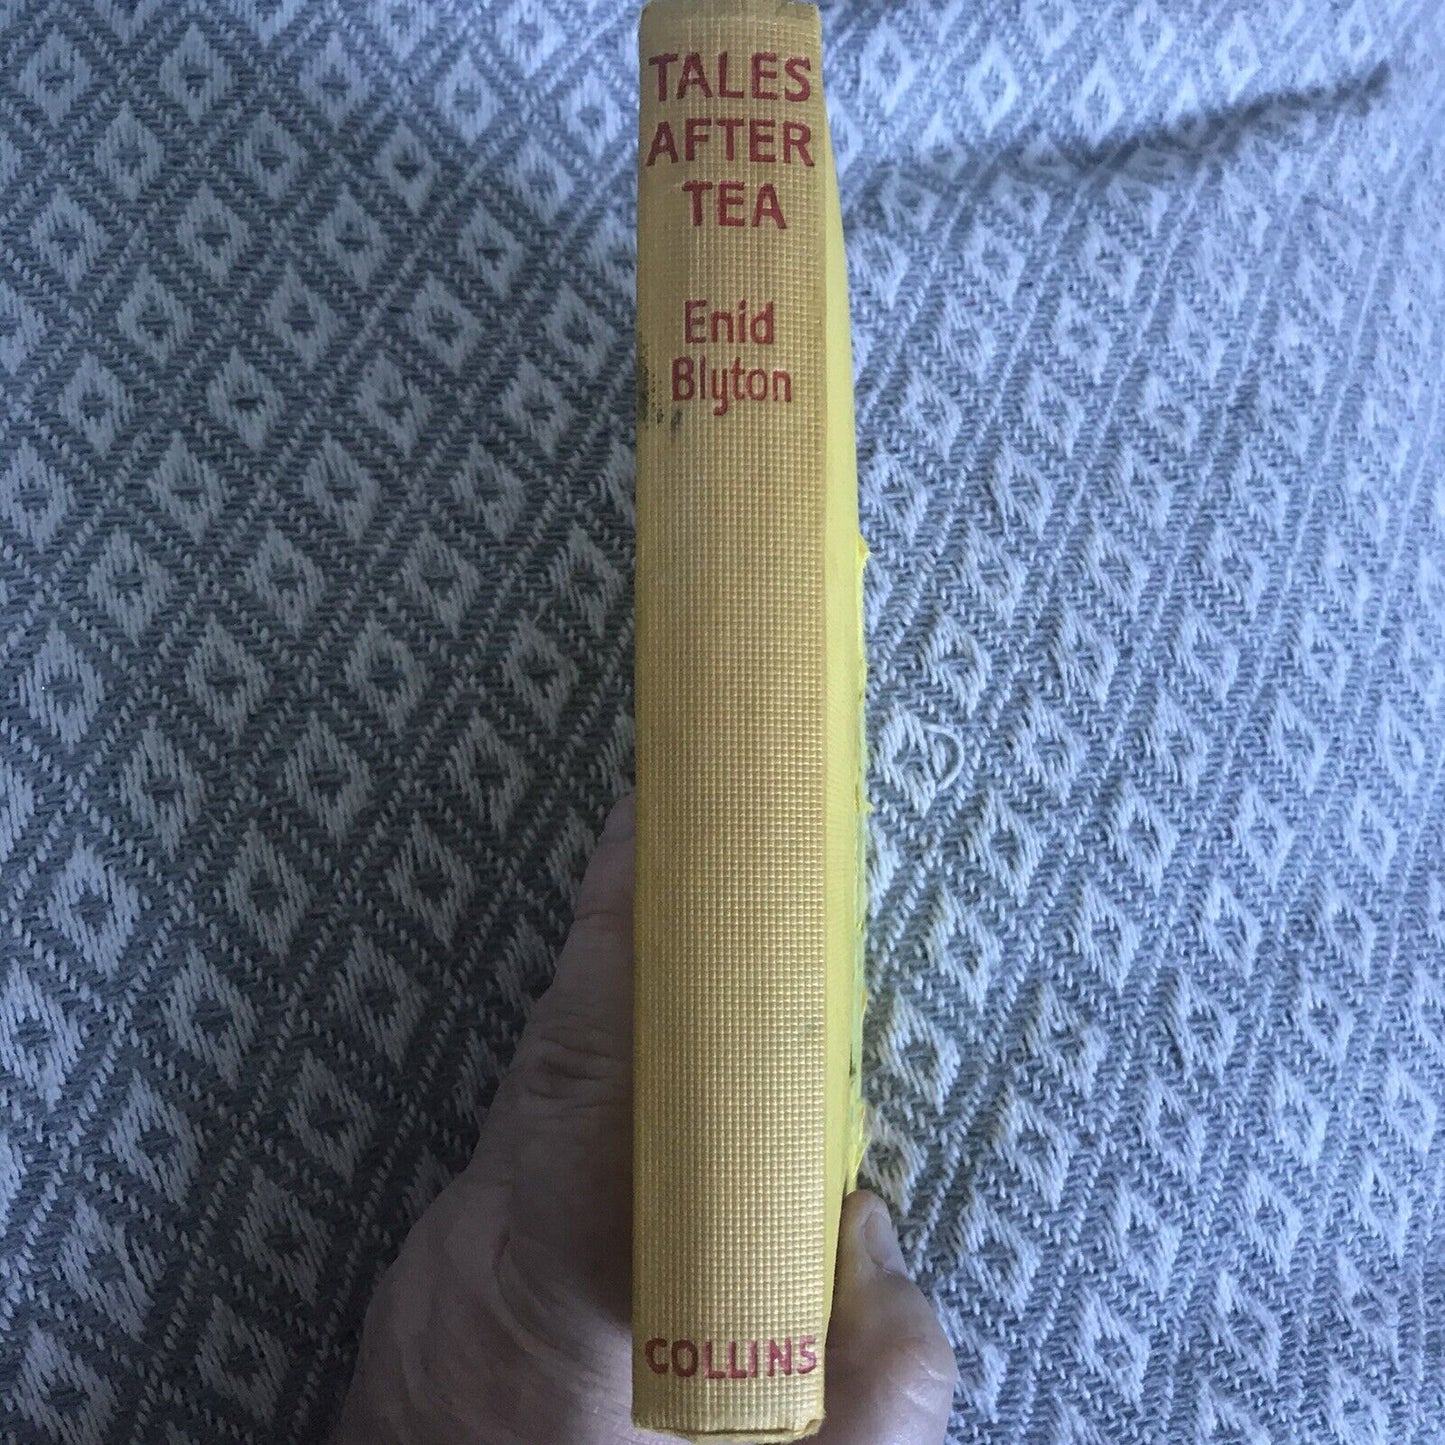 1964 Tales After Tea von Enid Blyton (Collins Pub)